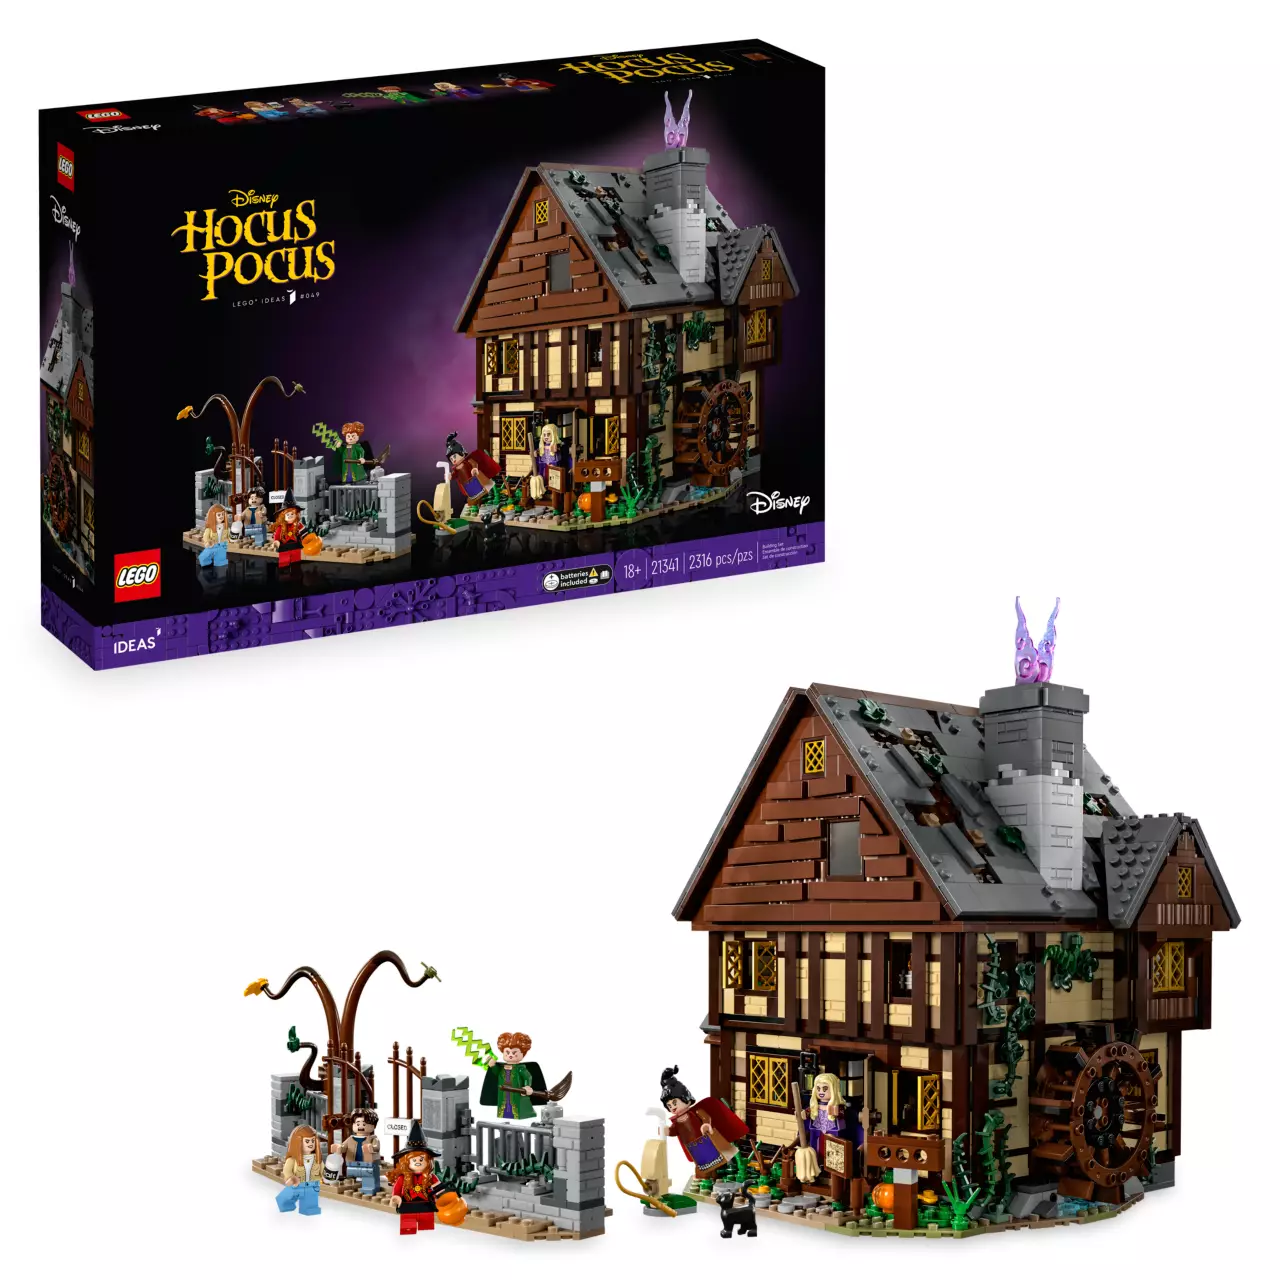 LEGO Disney Hocus Pocus The Sanderson Sisters' Cottage 21341